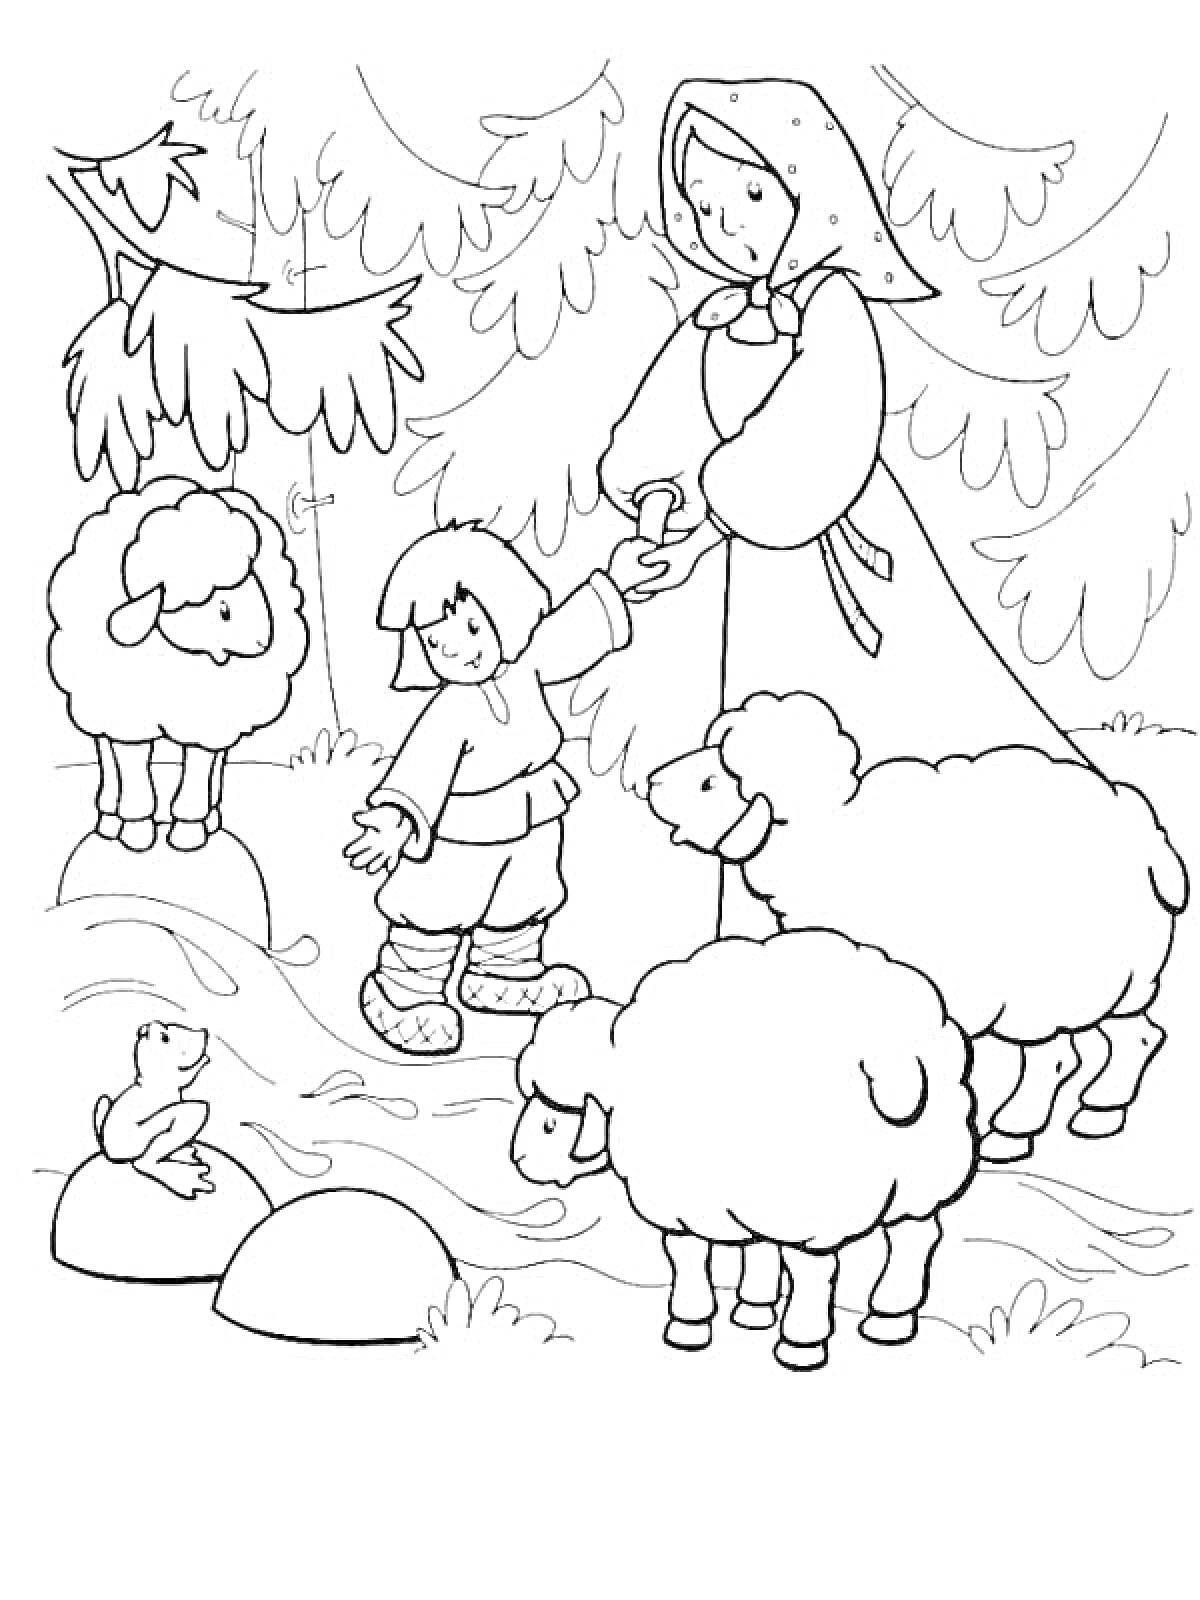 Раскраска Сестрица Аленушка и братец Иванушка, держащиеся за руки возле ручья в лесу, овечки, лягушка